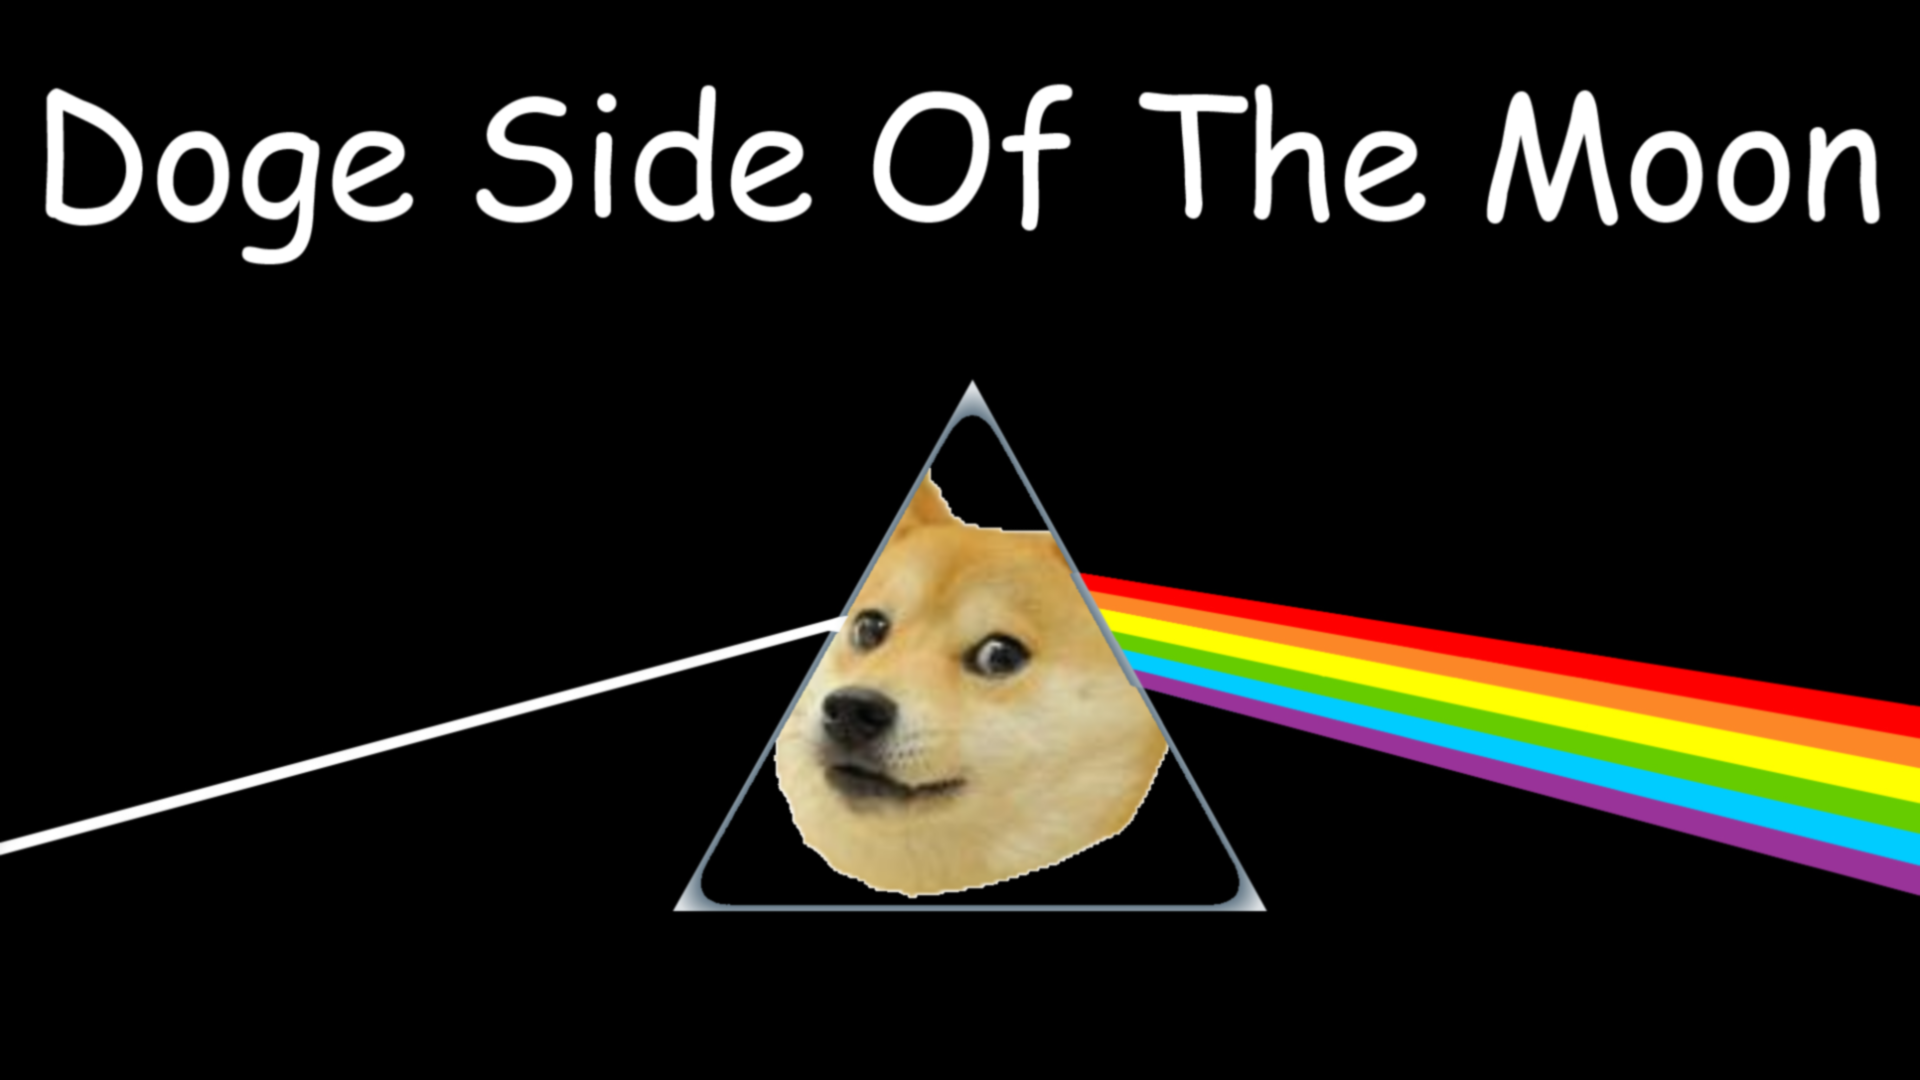 Doge Meme Wallpaper 1920x1080 Doge side of the moon